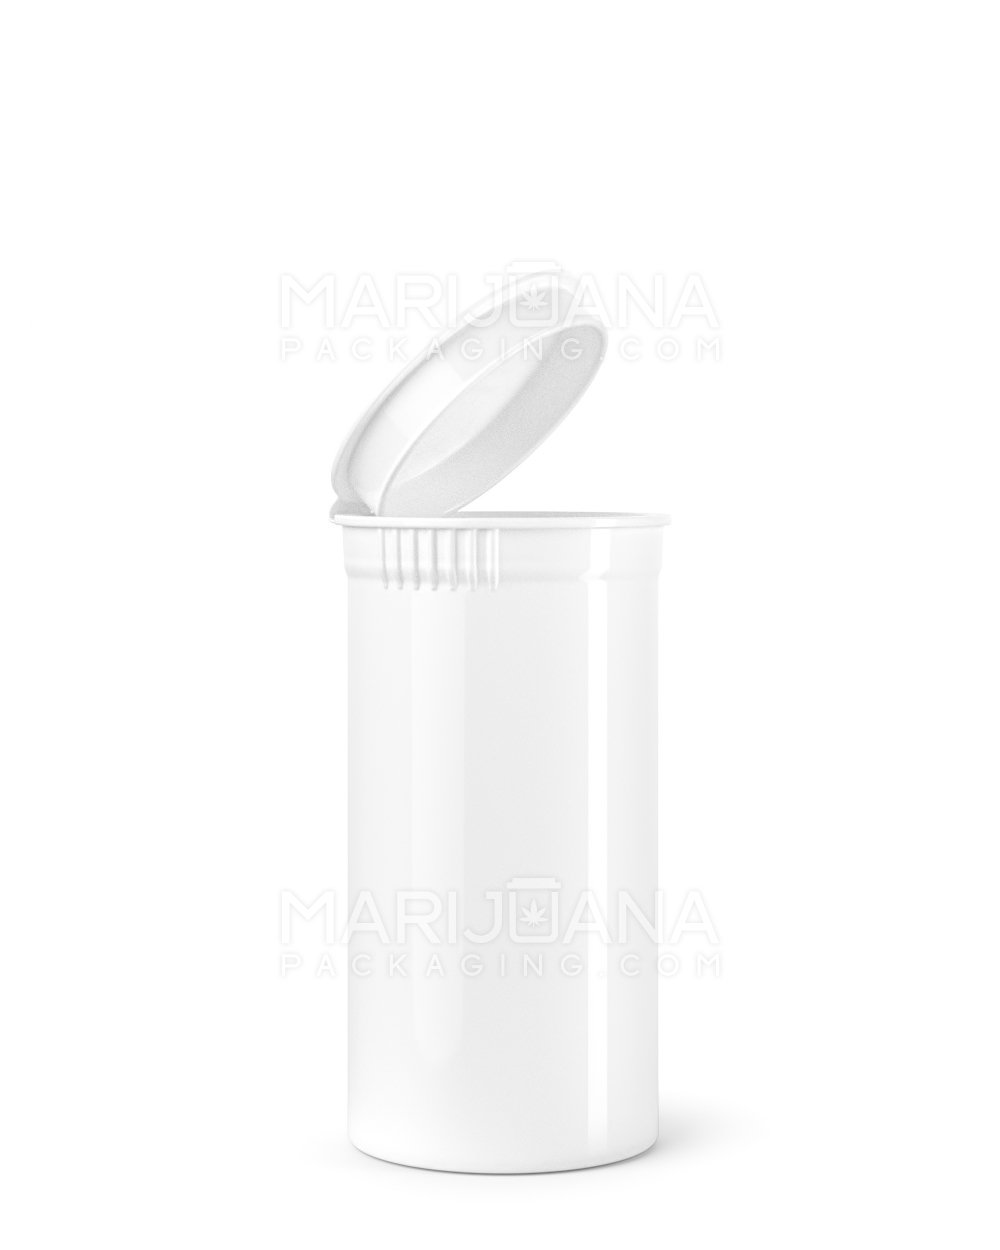 Child Resistant Opaque White Pop Top Bottles | 13dr - 2g | Sample - 1